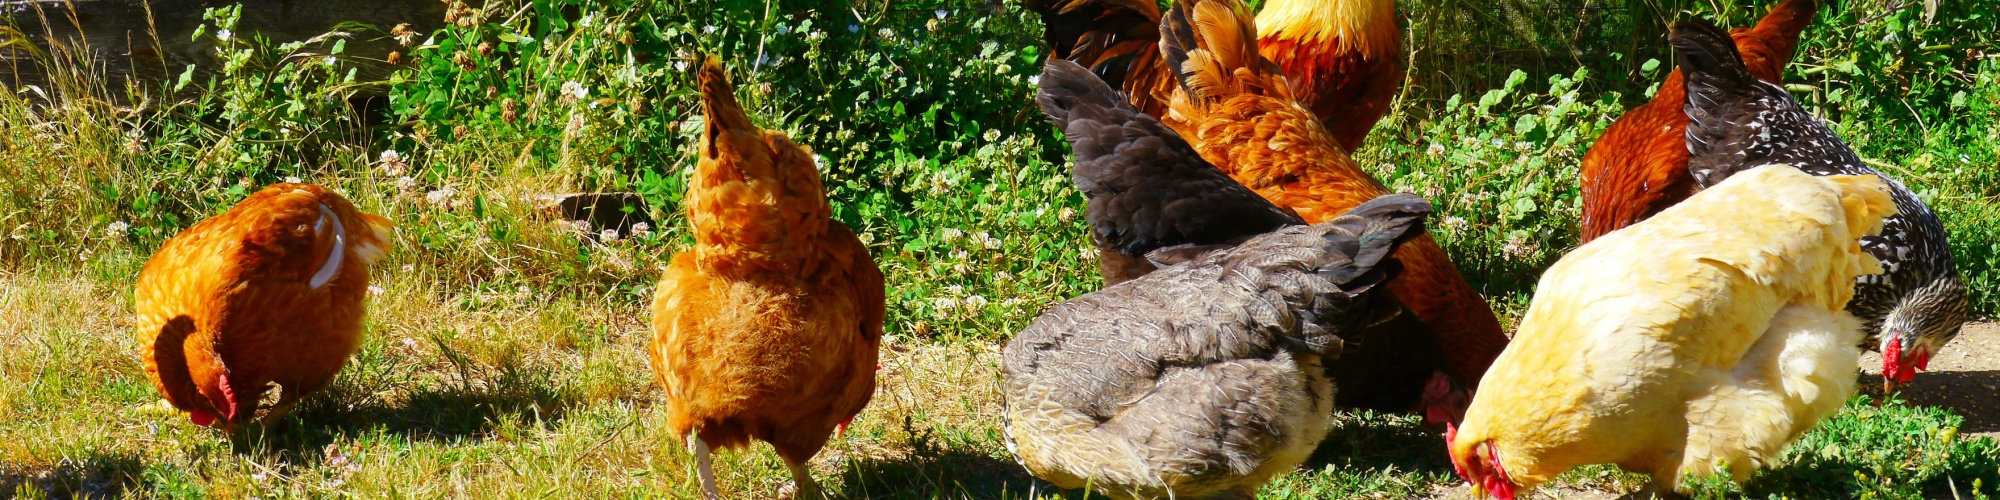 Chickens at Johnson Farms by Rick Obst via Flickr